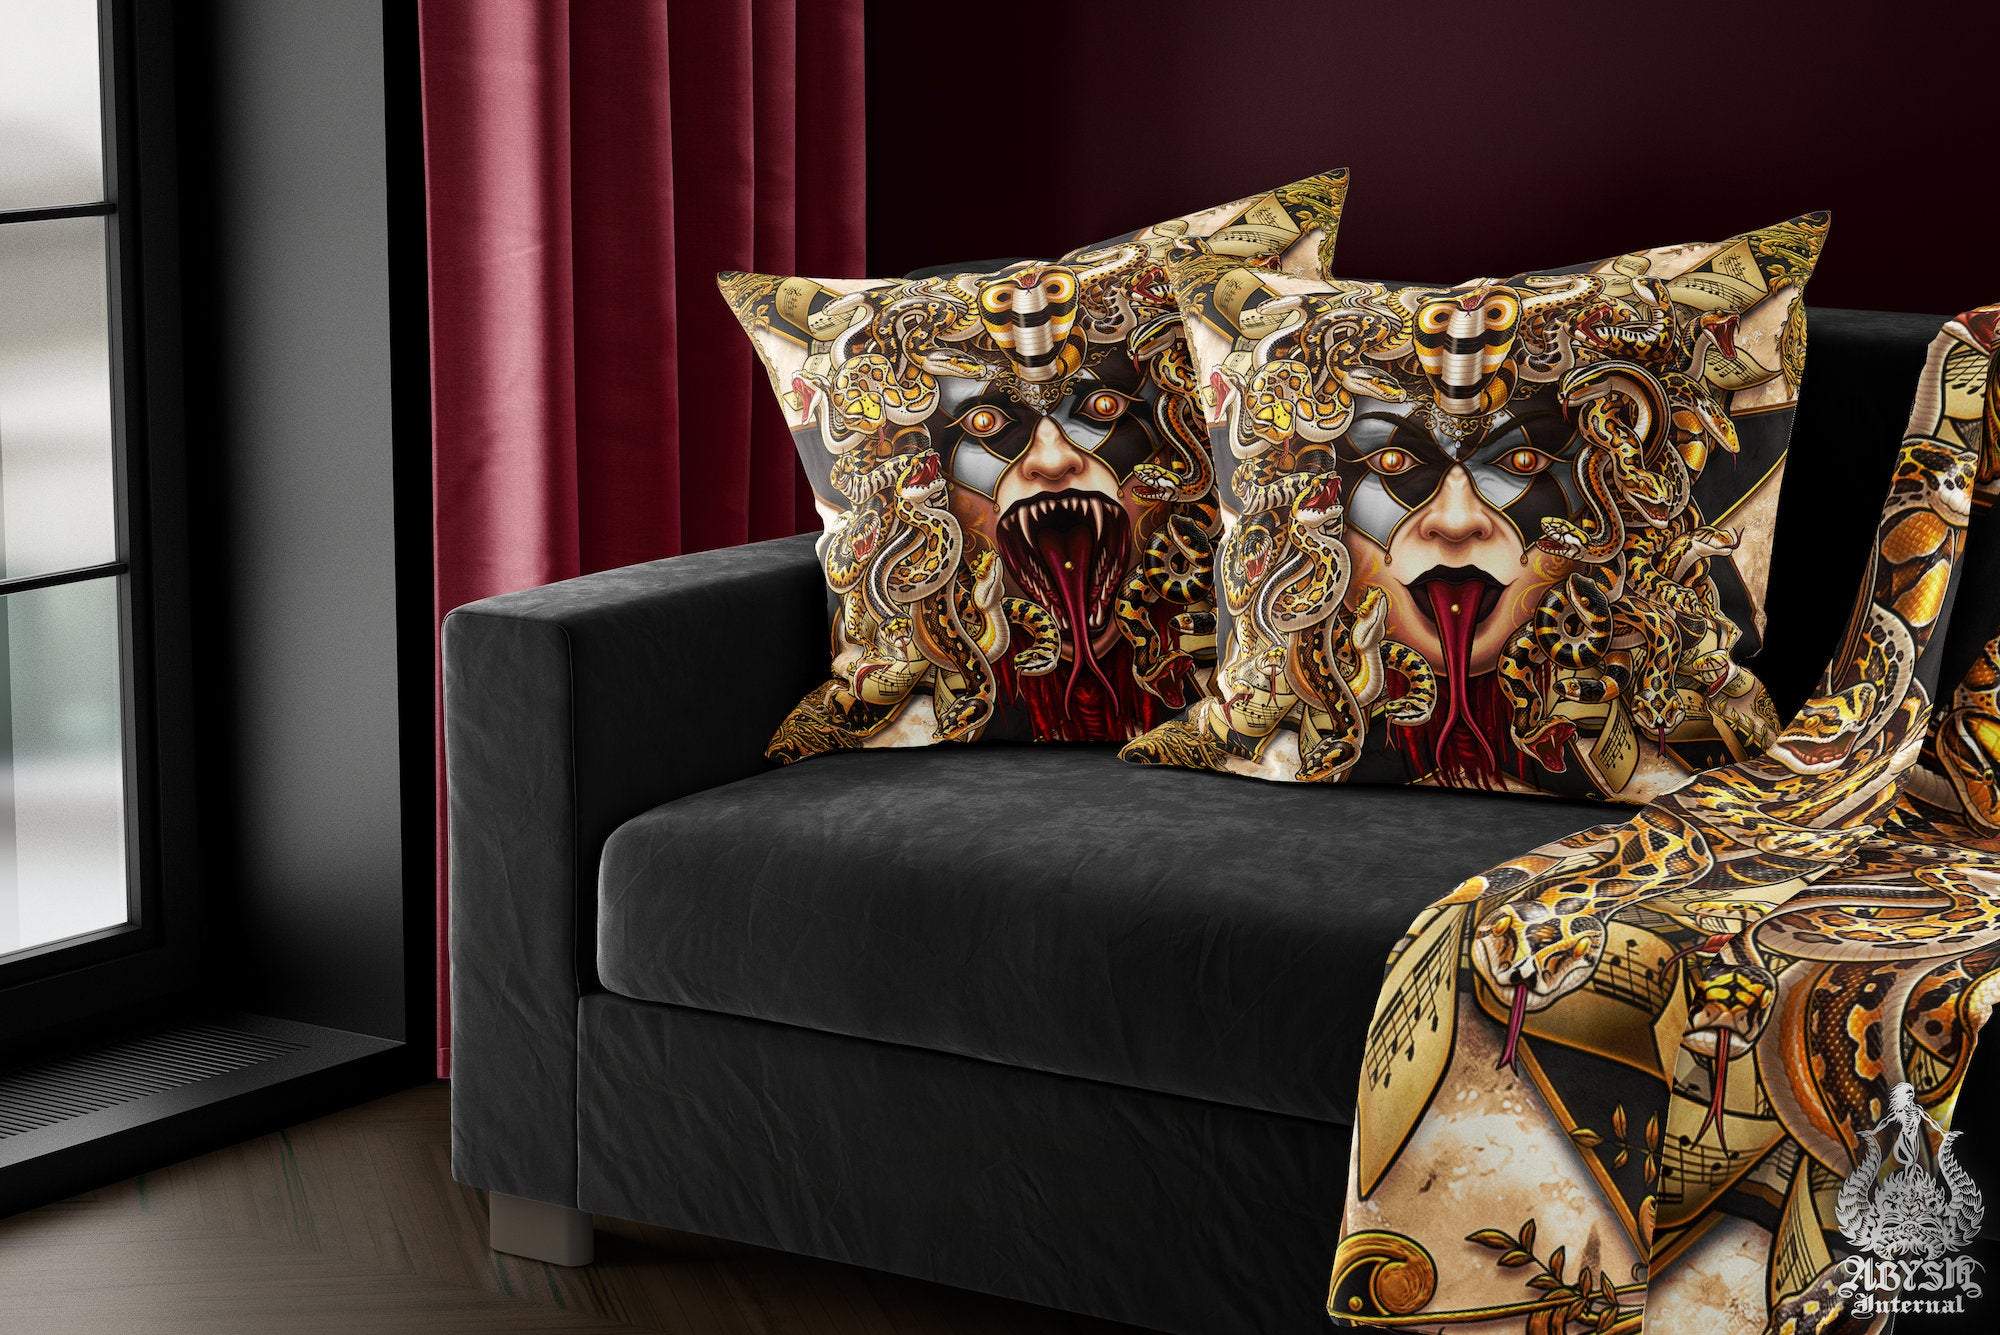 Medusa Throw Pillow, Decorative Accent Cushion, Gamer Room Decor, Gothic Art, Alternative Home - Harlequin, Black & Gold Snakes - Abysm Internal